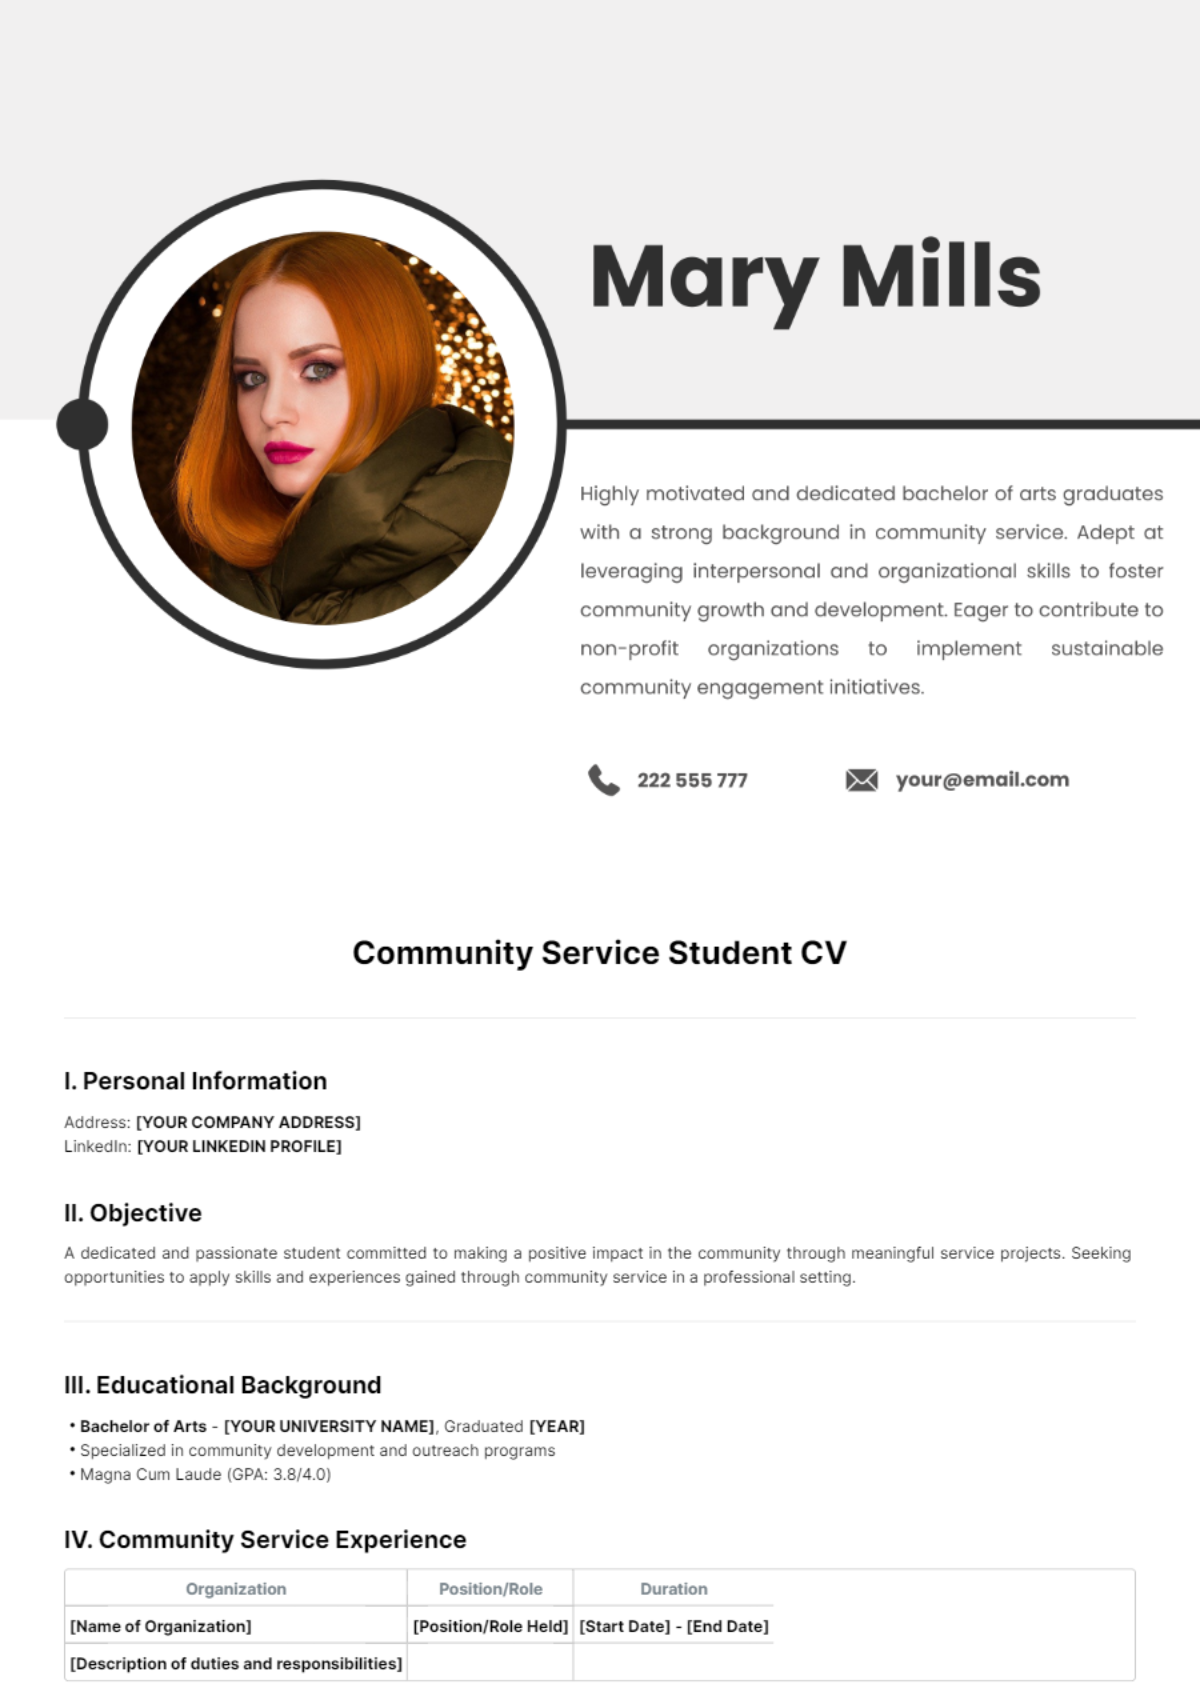 Community Service Student CV Template